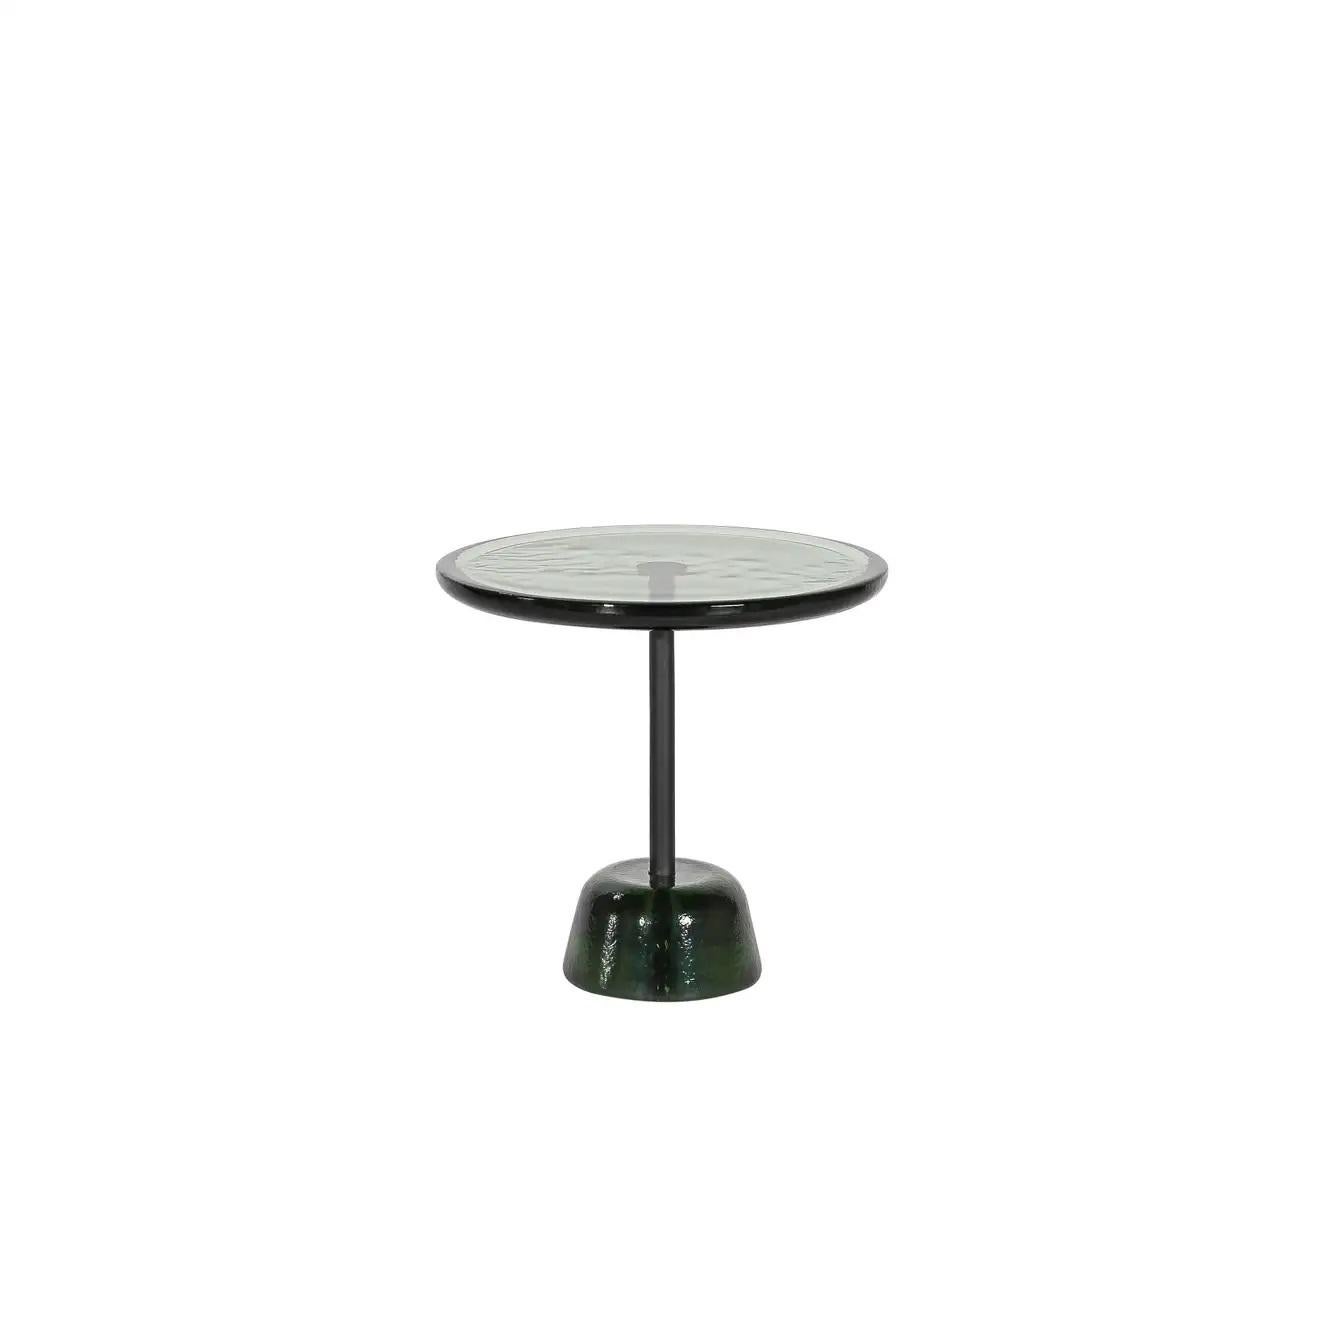 Brass Pina Low Side Table in Glass & Steel, Green/Black, by Sebastian Herkner for Pulpo